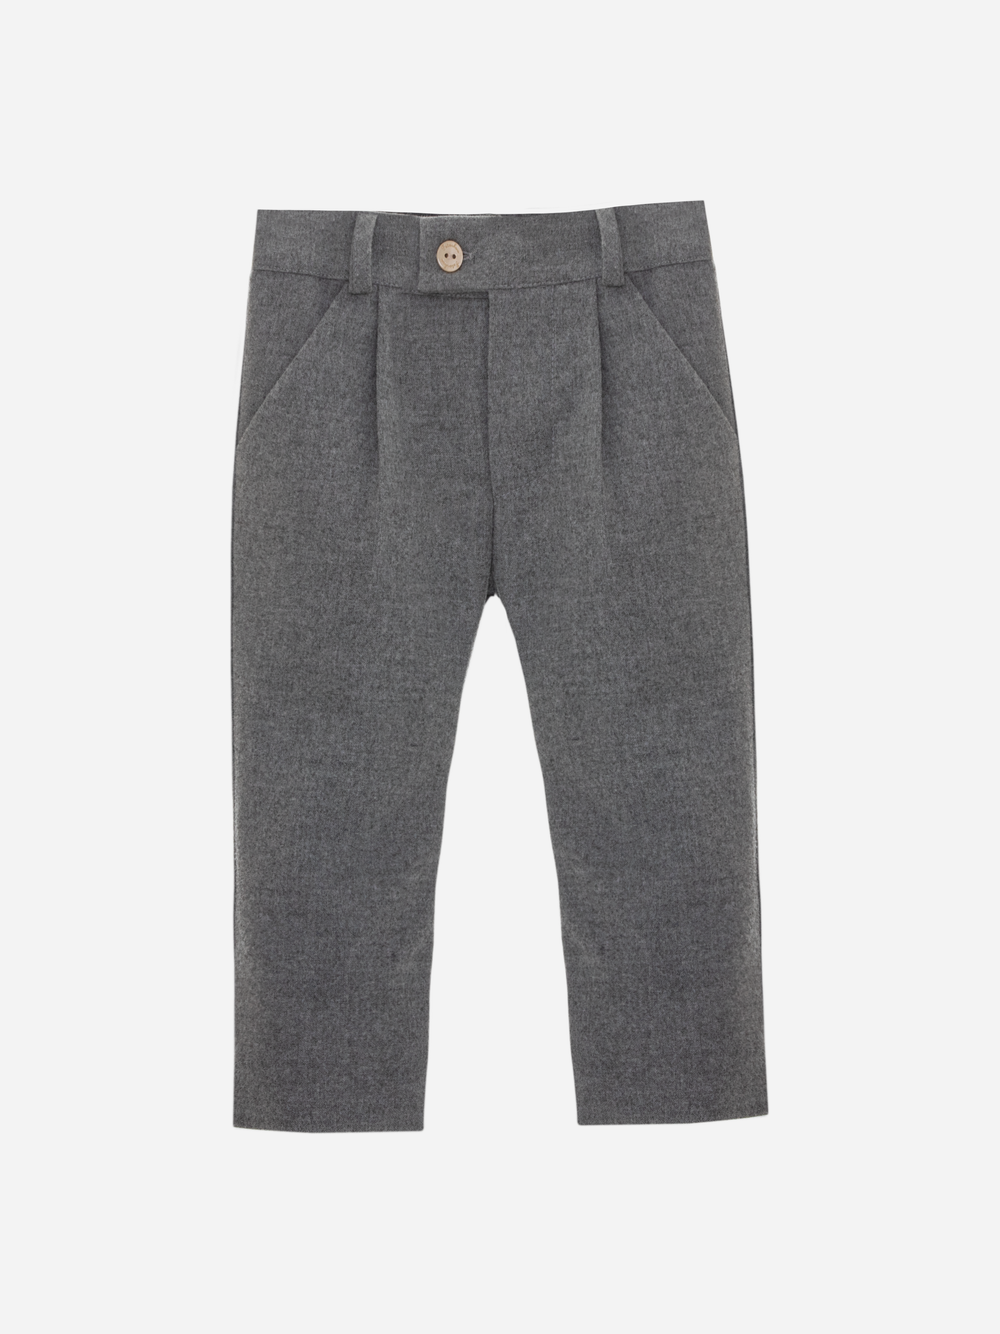 Grey Flannel Pants